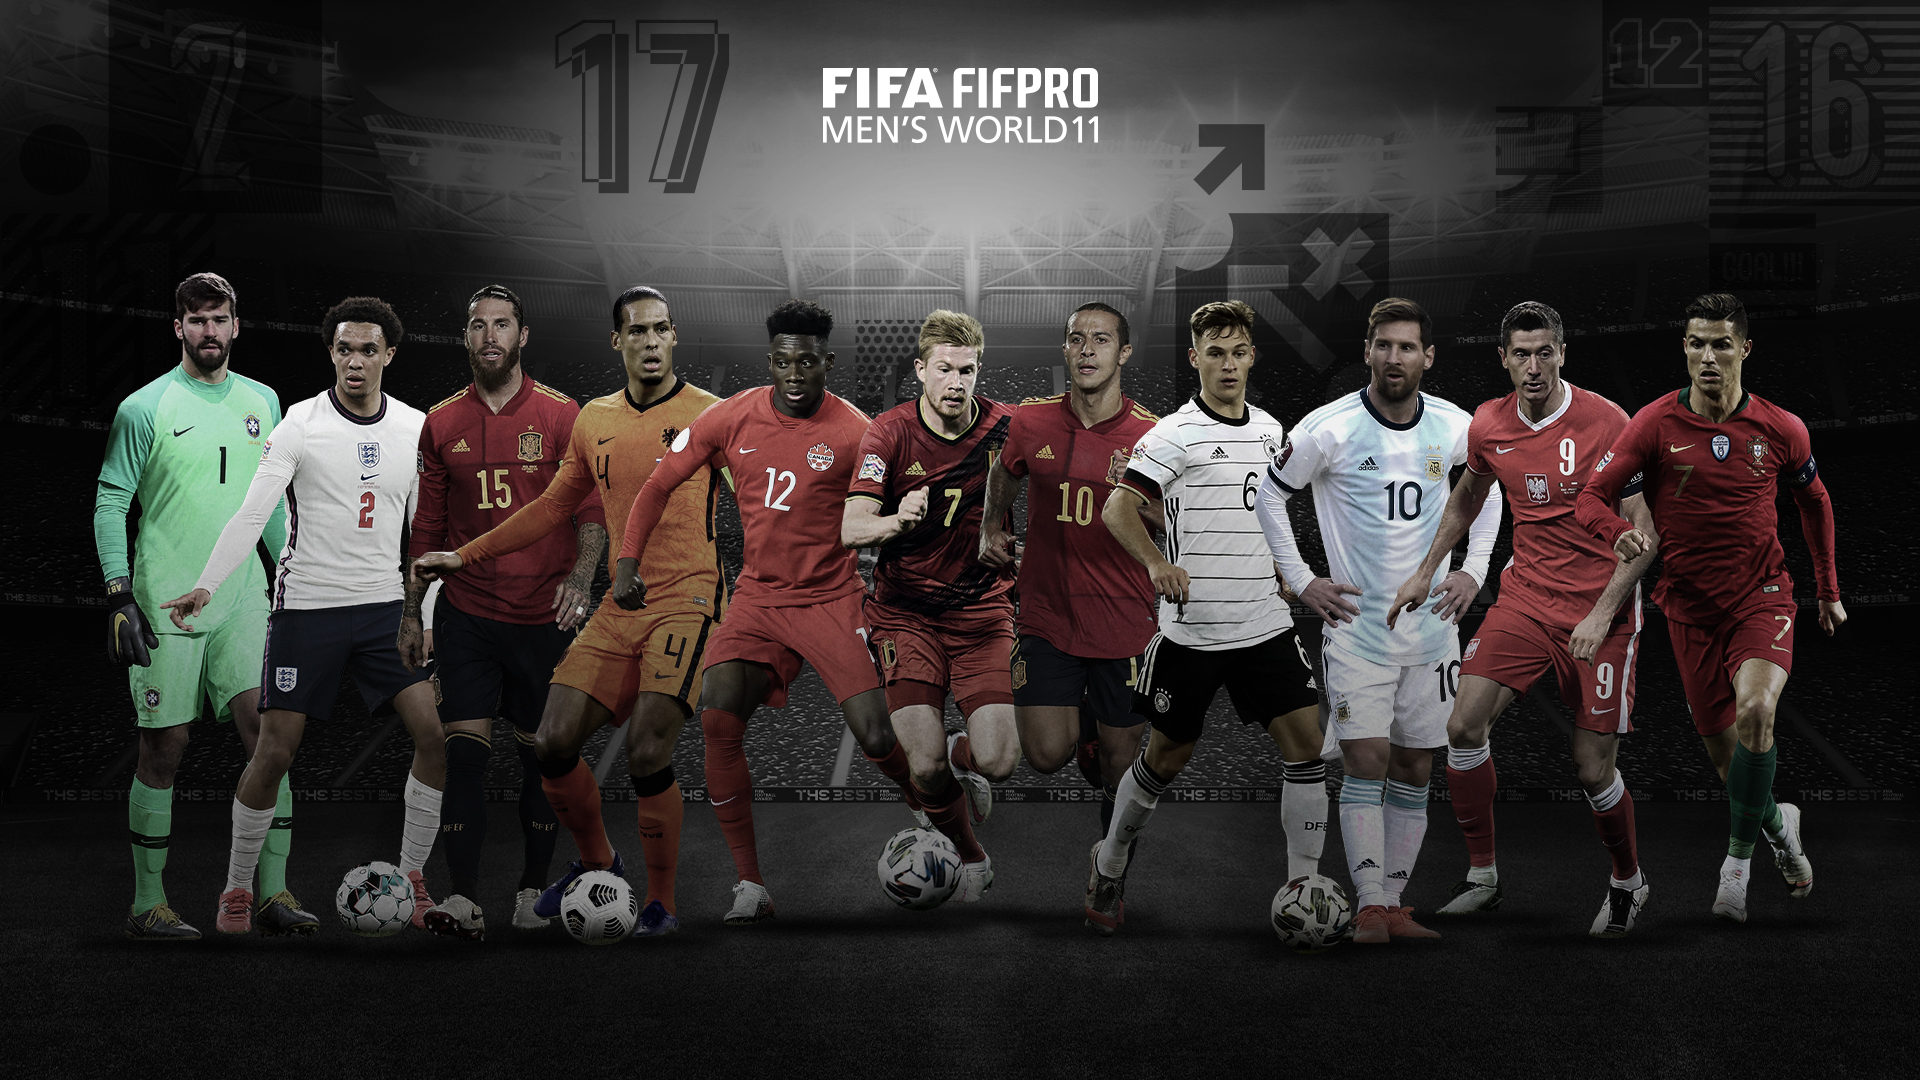 Fifa игроки. Символическая сборная по футболу 2020. Символическая сборная ФИФА. FIFA FIFPRO World XI. Команда года 2022 футбол ФИФА.